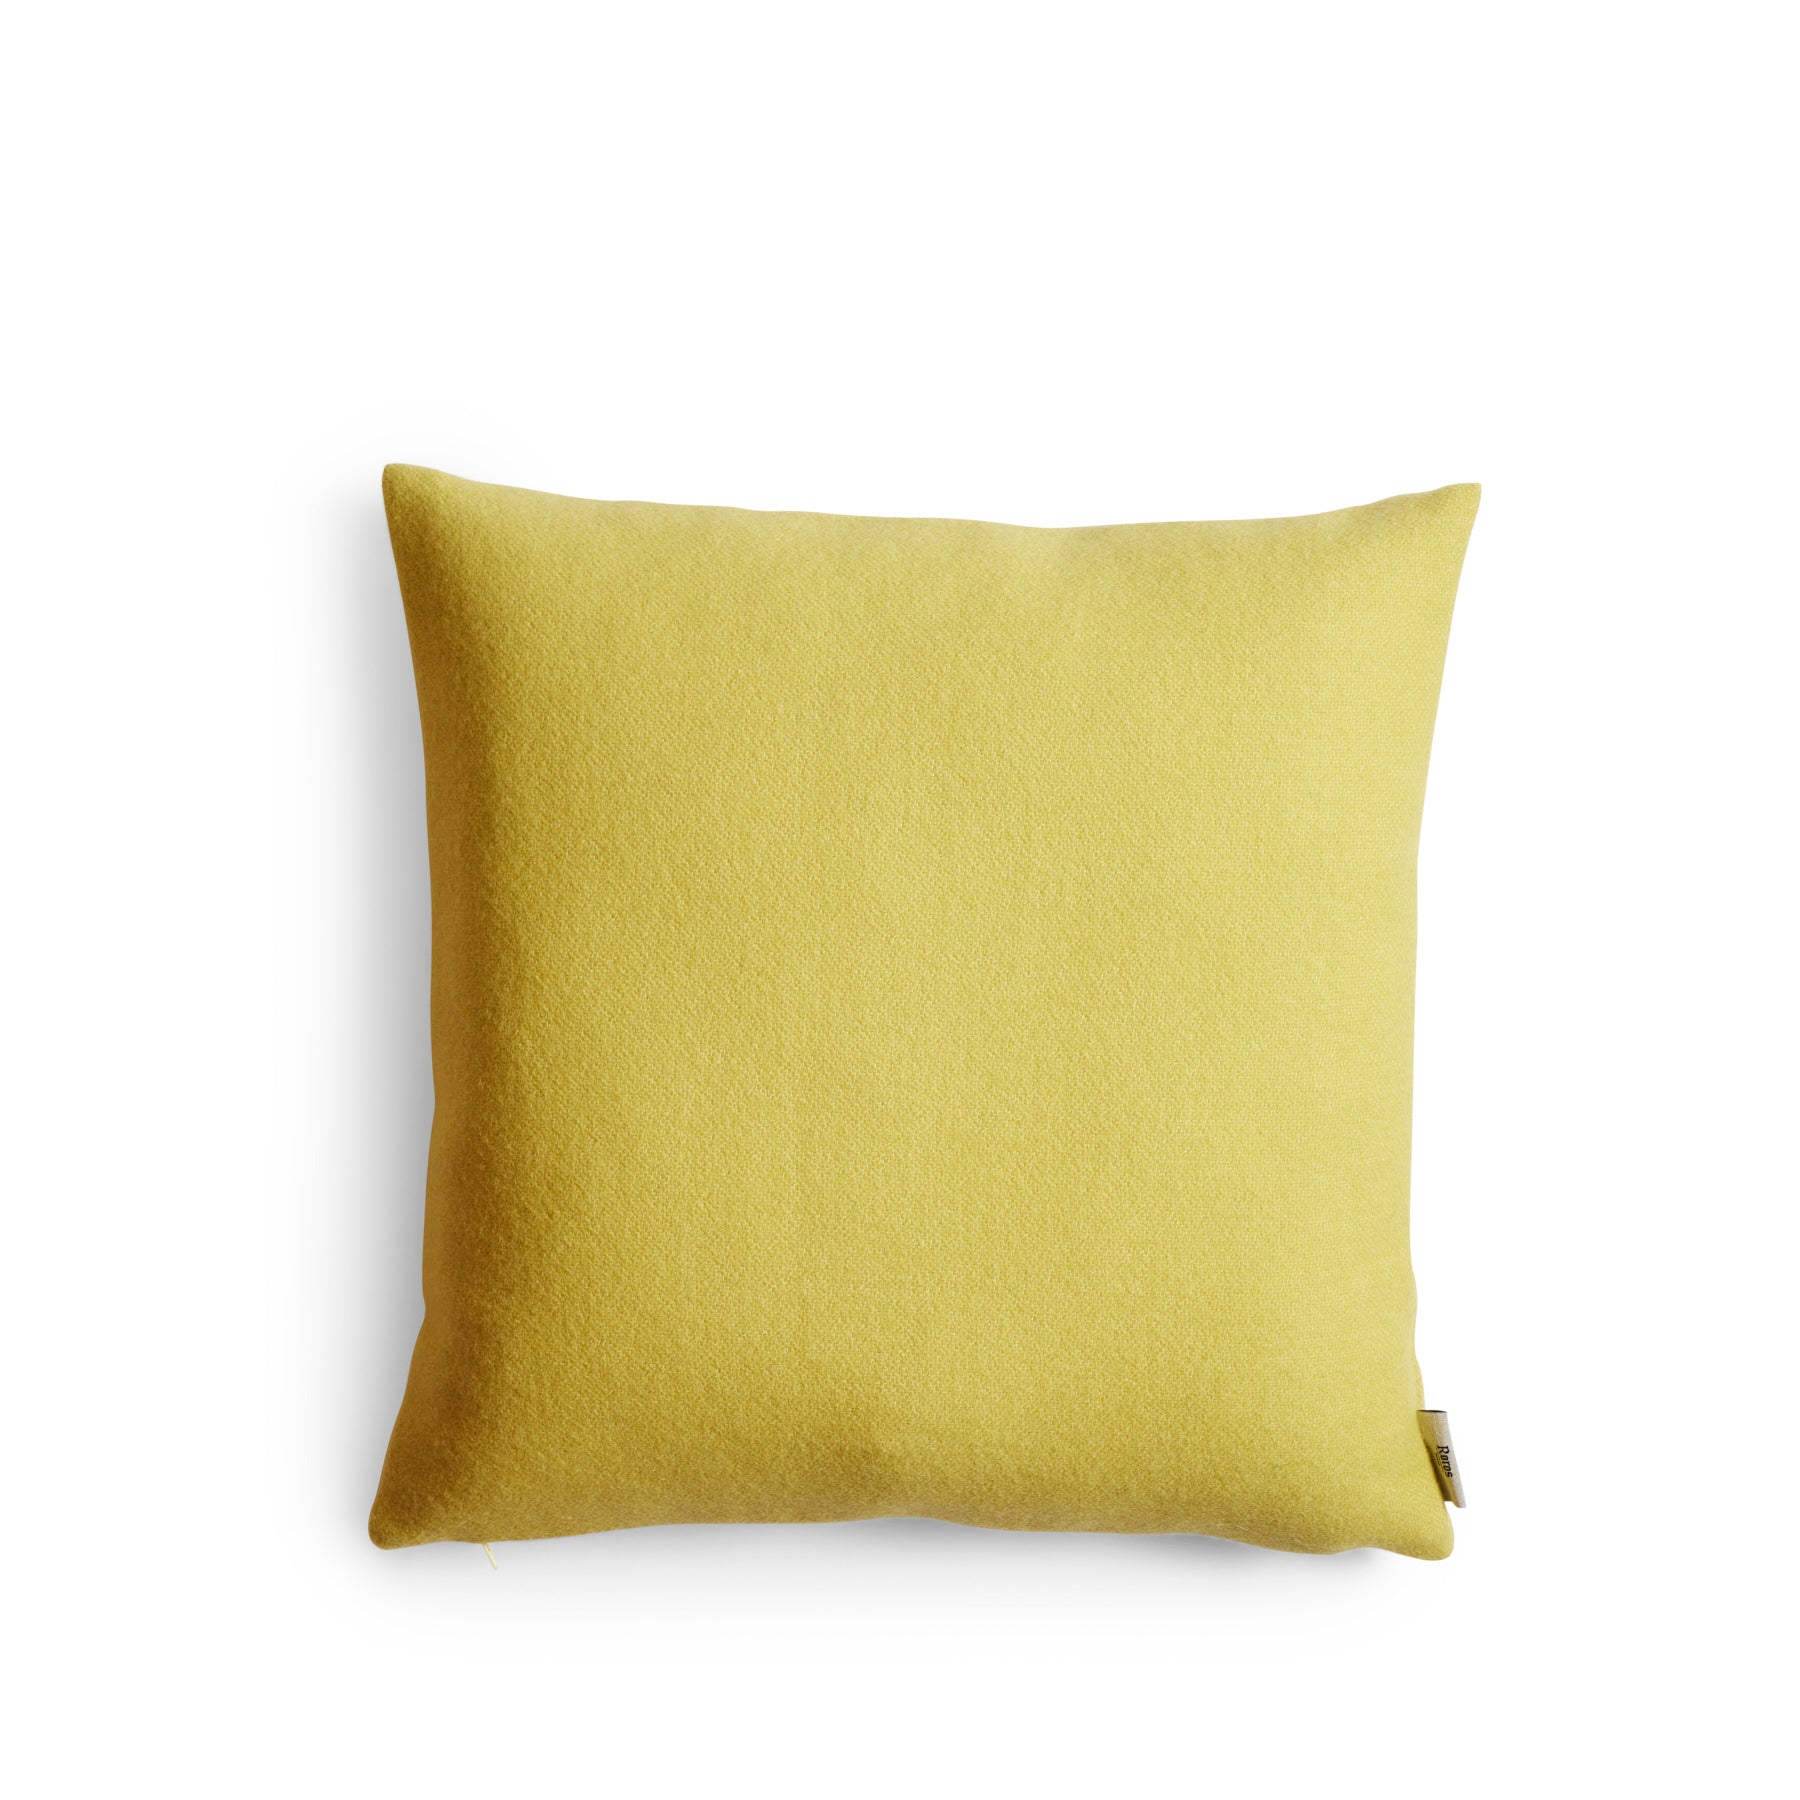 Stemor Pillow in Sunshine Yellow Zoom Image 1